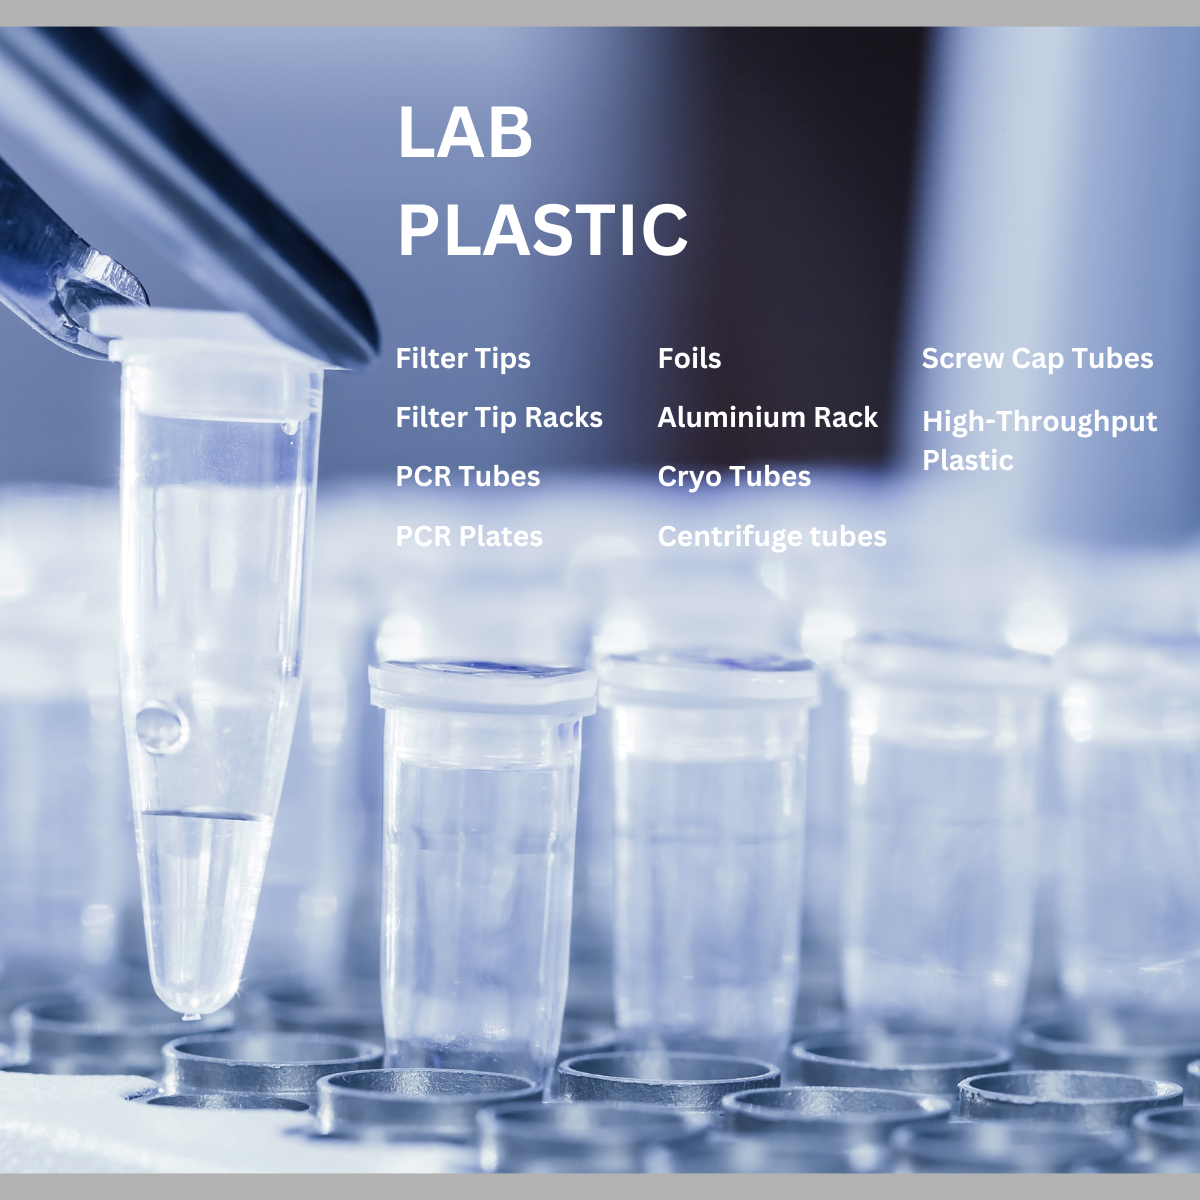 Lab Plastic, filter tips, cryo tubes, centrifuge tubes, high-throughput plastic, PCR plates, PCR tubes